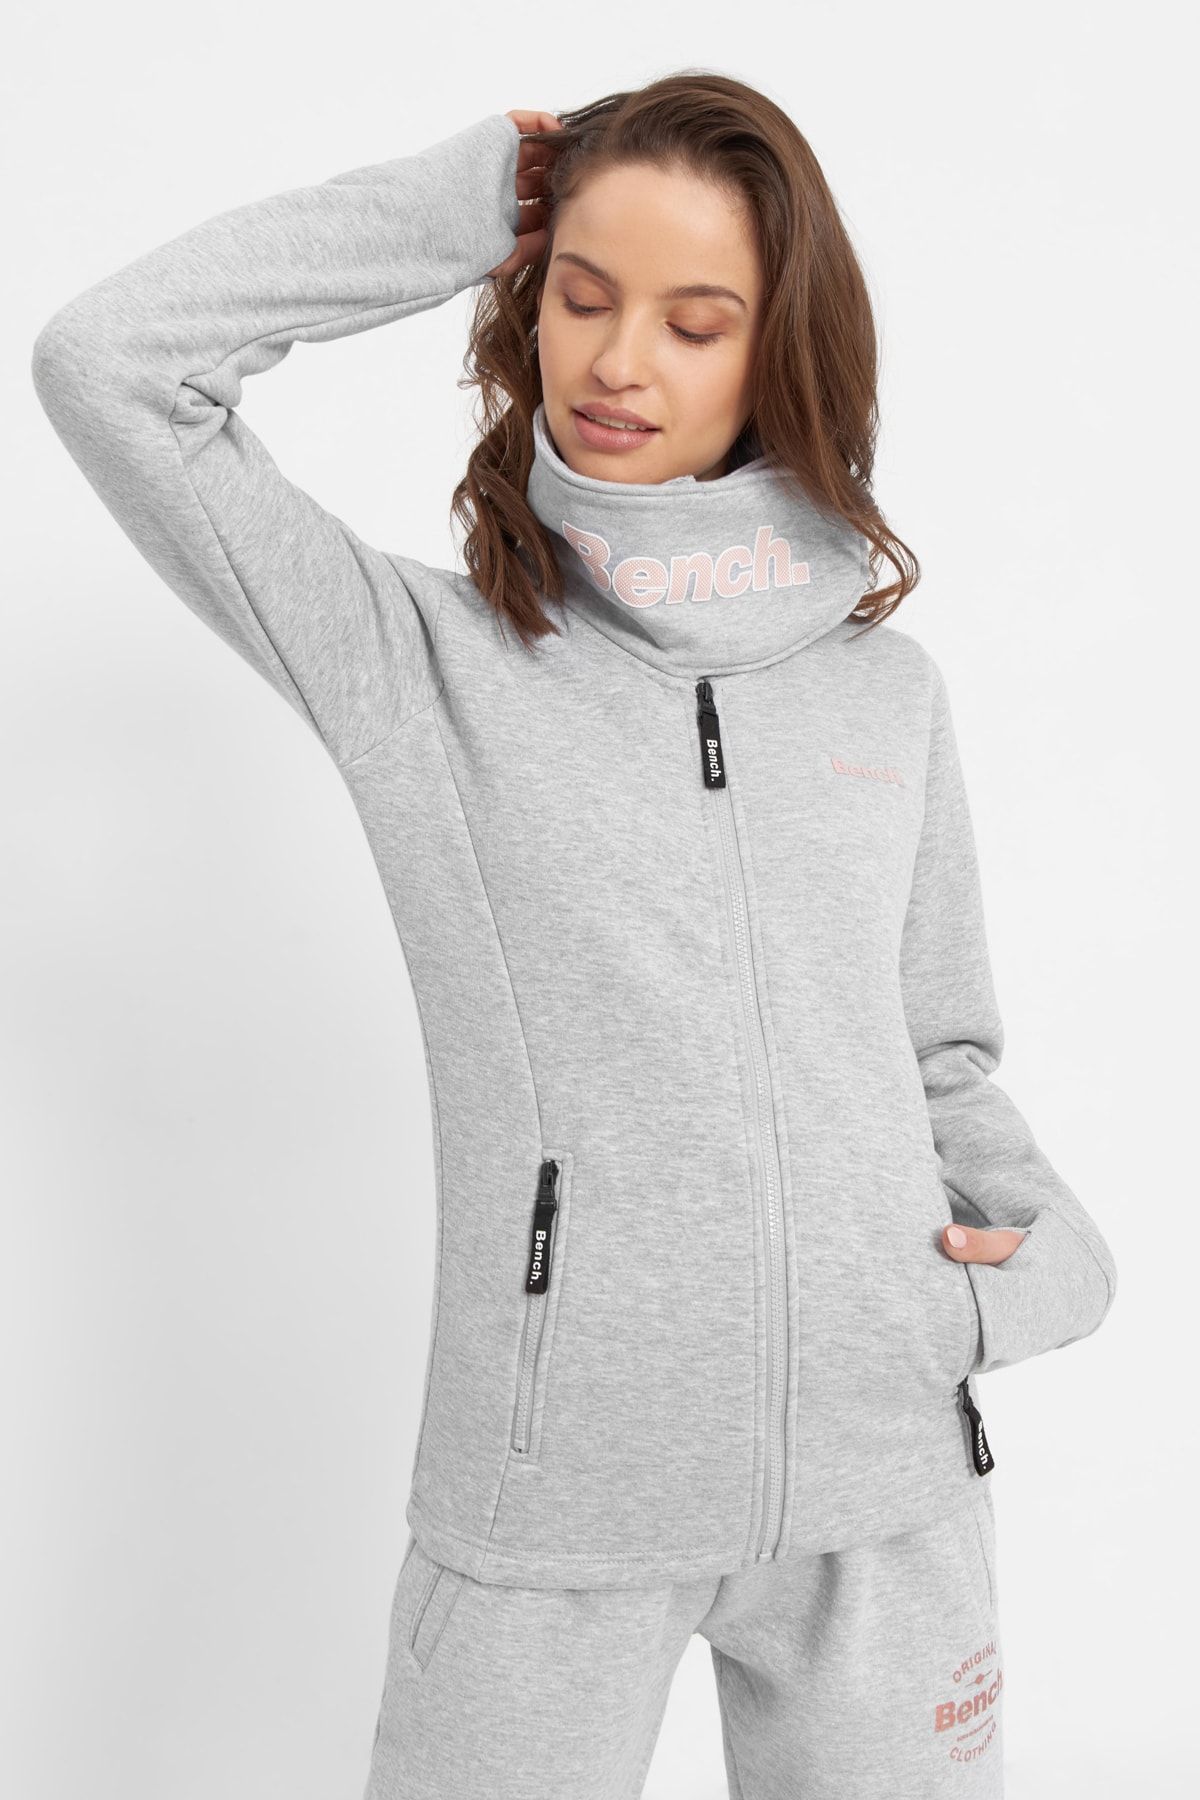 Sweatshirt fit - Trendyol - Gray BENCH - Regular